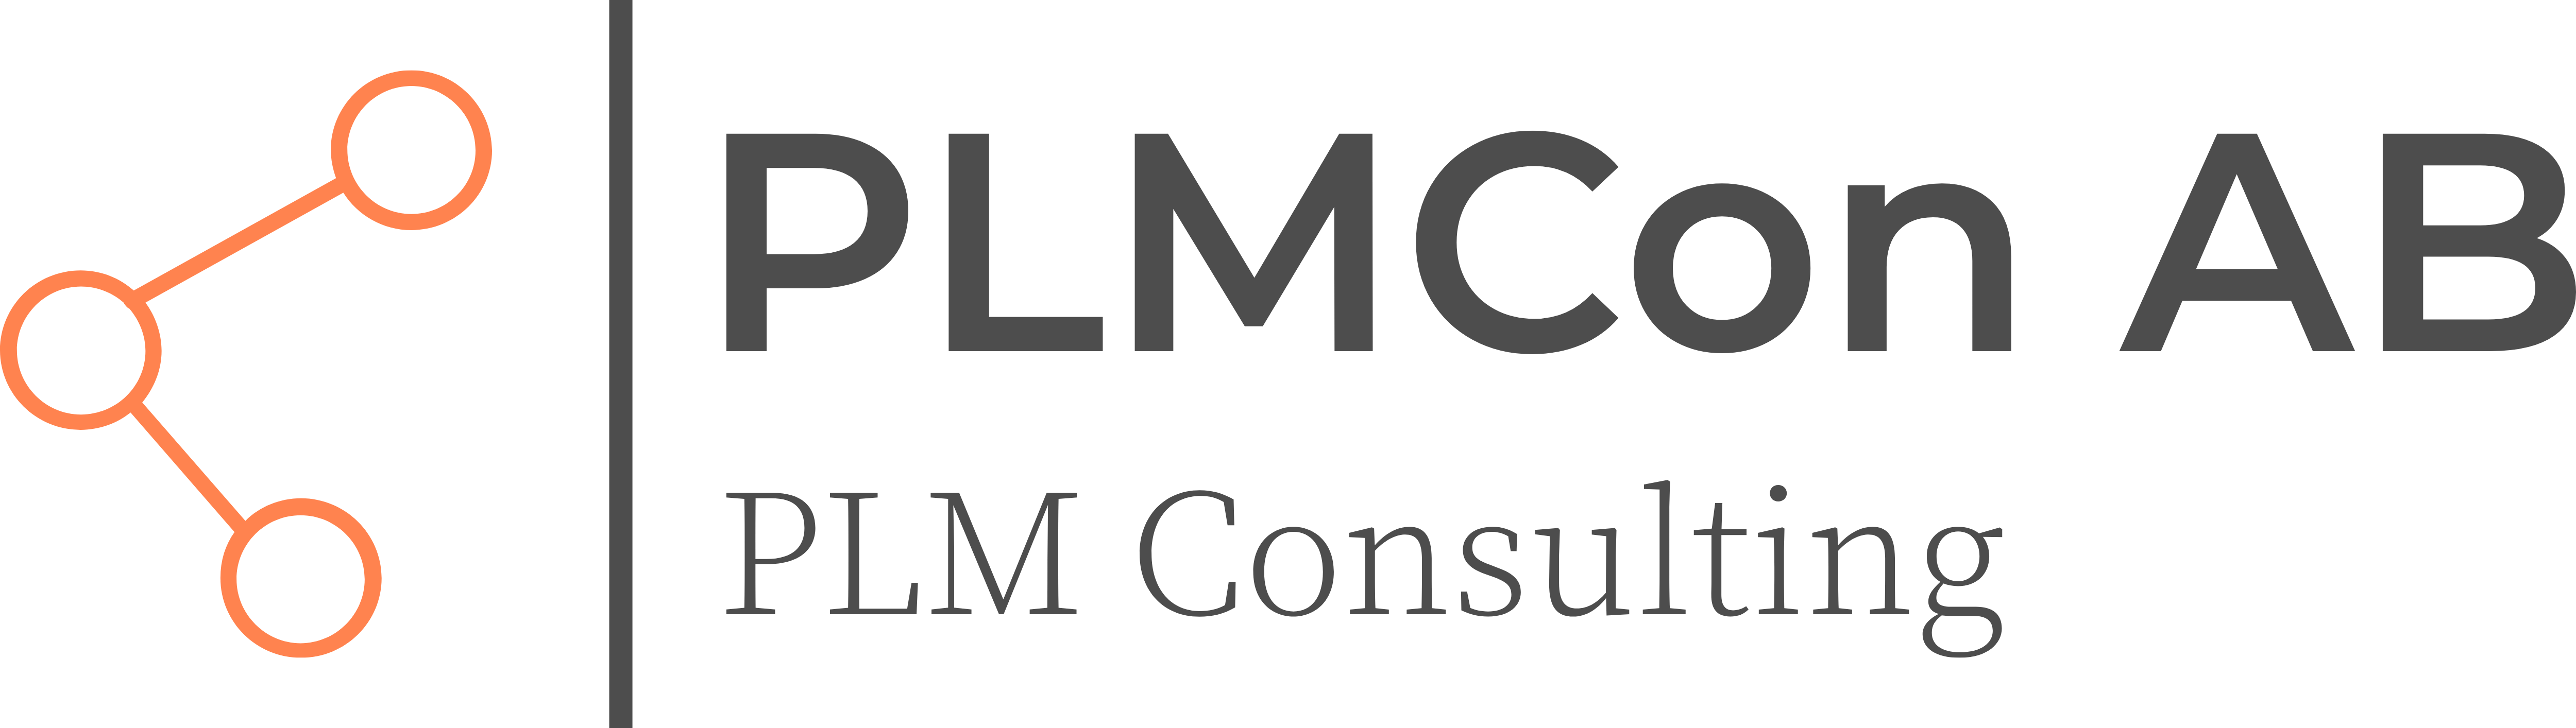 PLMCon AB - PLM Consulting